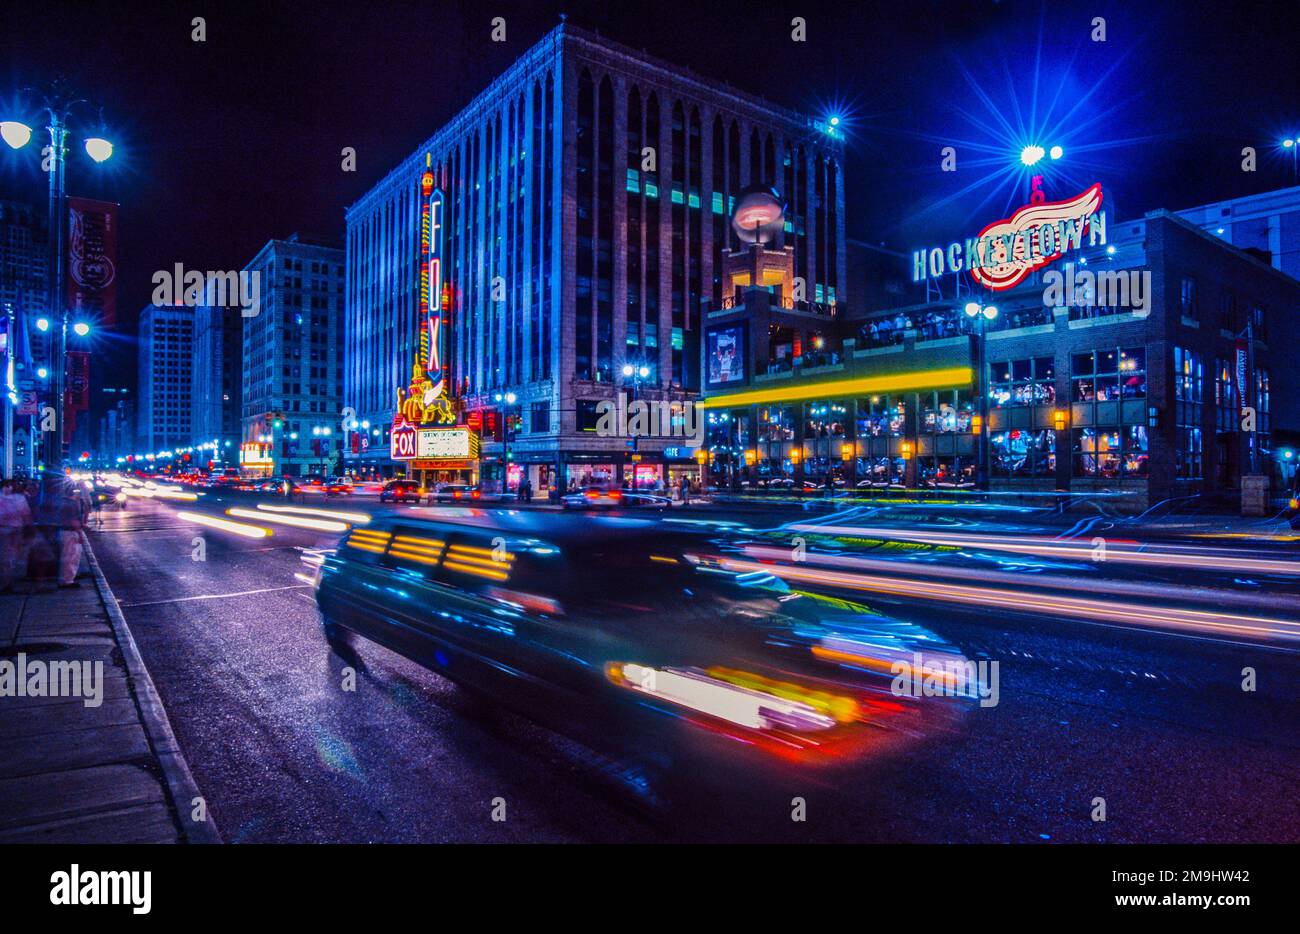 Car on night, city street, Woodward Avenue, Downtown Detroit, Michigan, USA Stock Photo